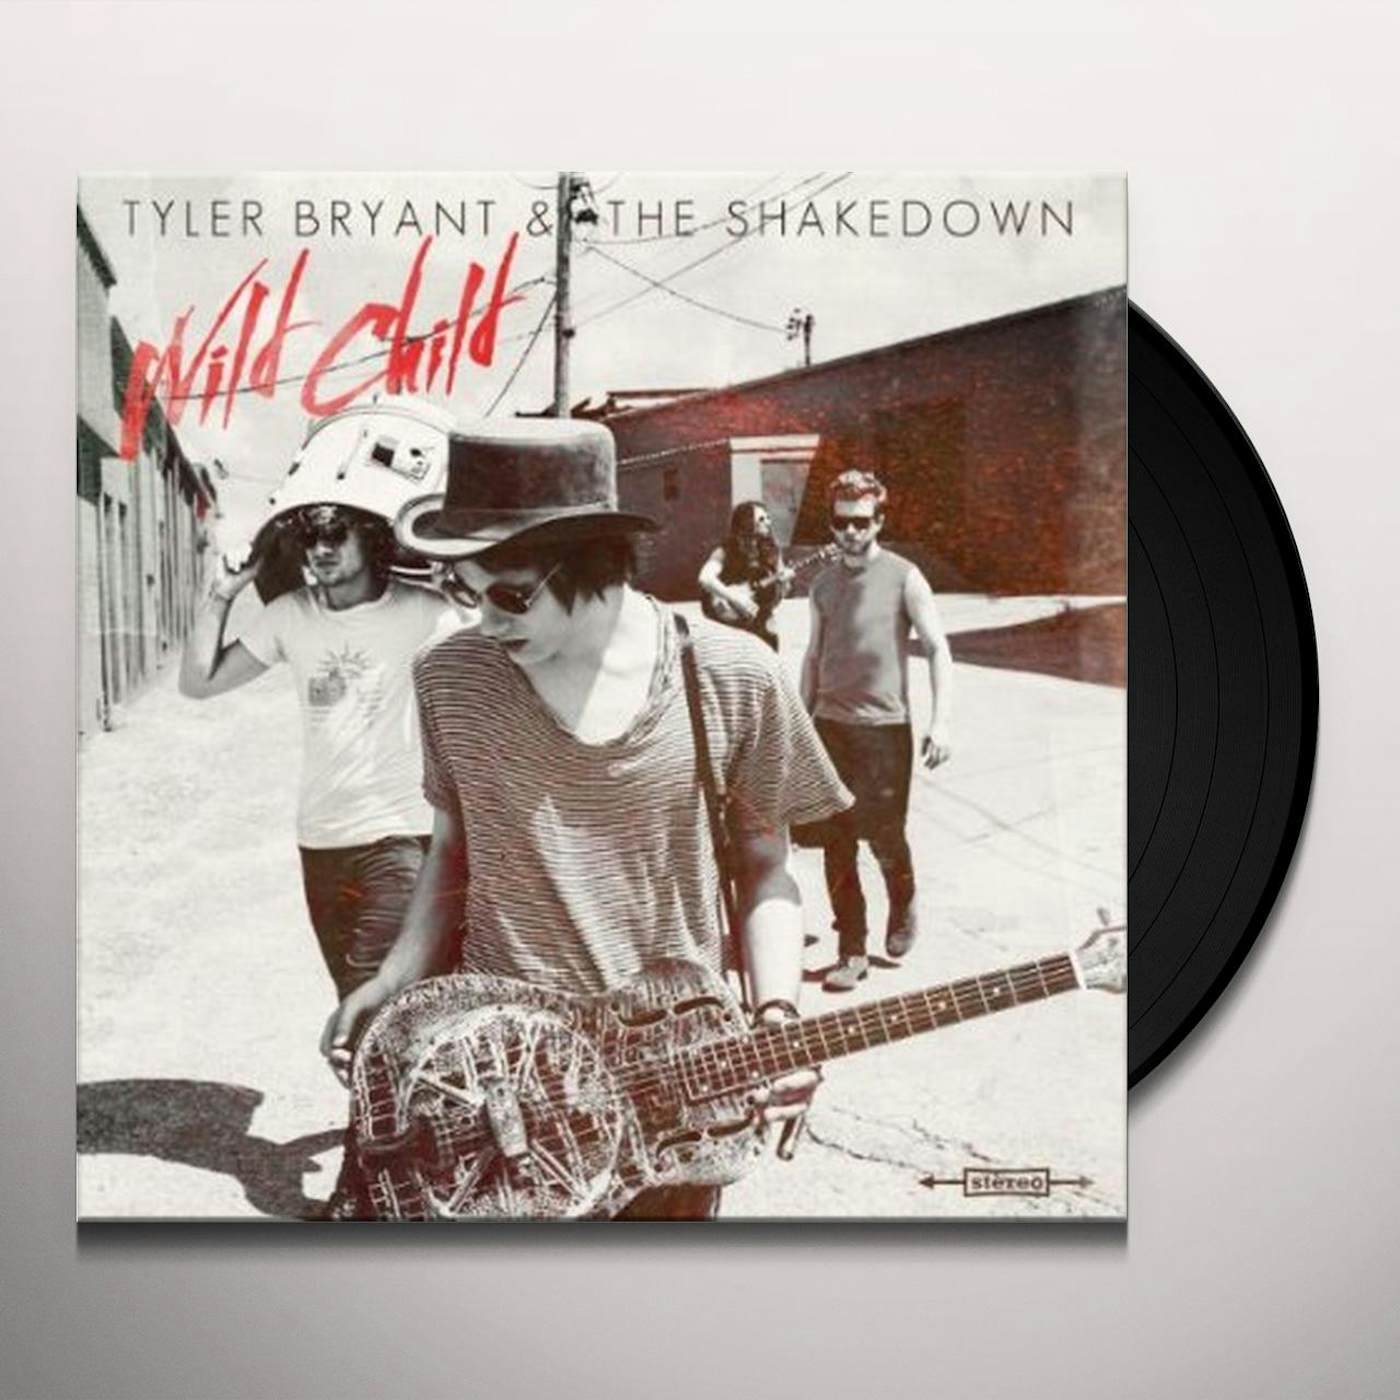 Tyler Bryant & the Shakedown Wild Child Vinyl Record